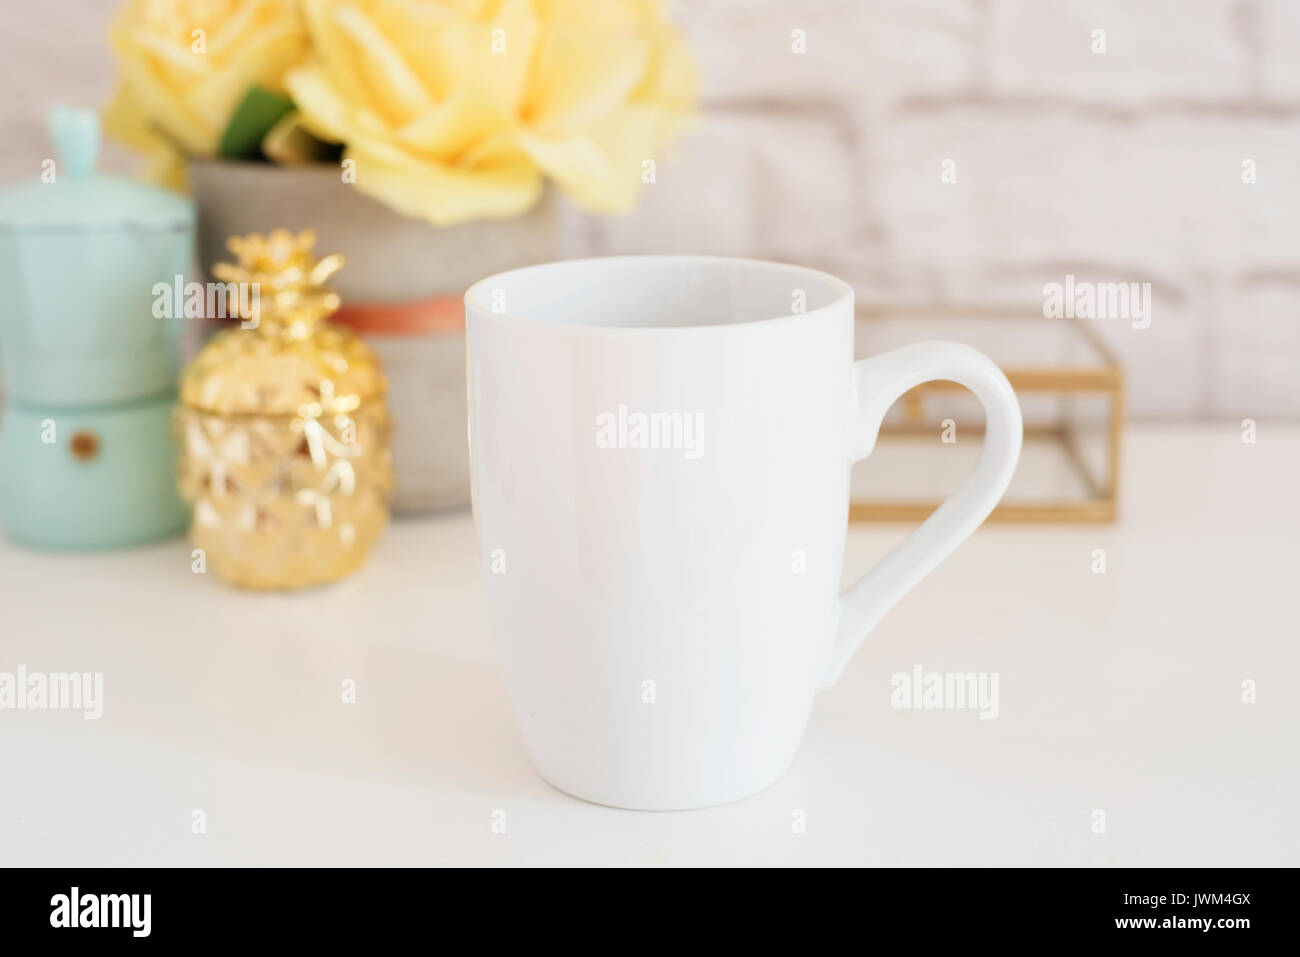 Mug printing hi-res stock photography and images - Alamy